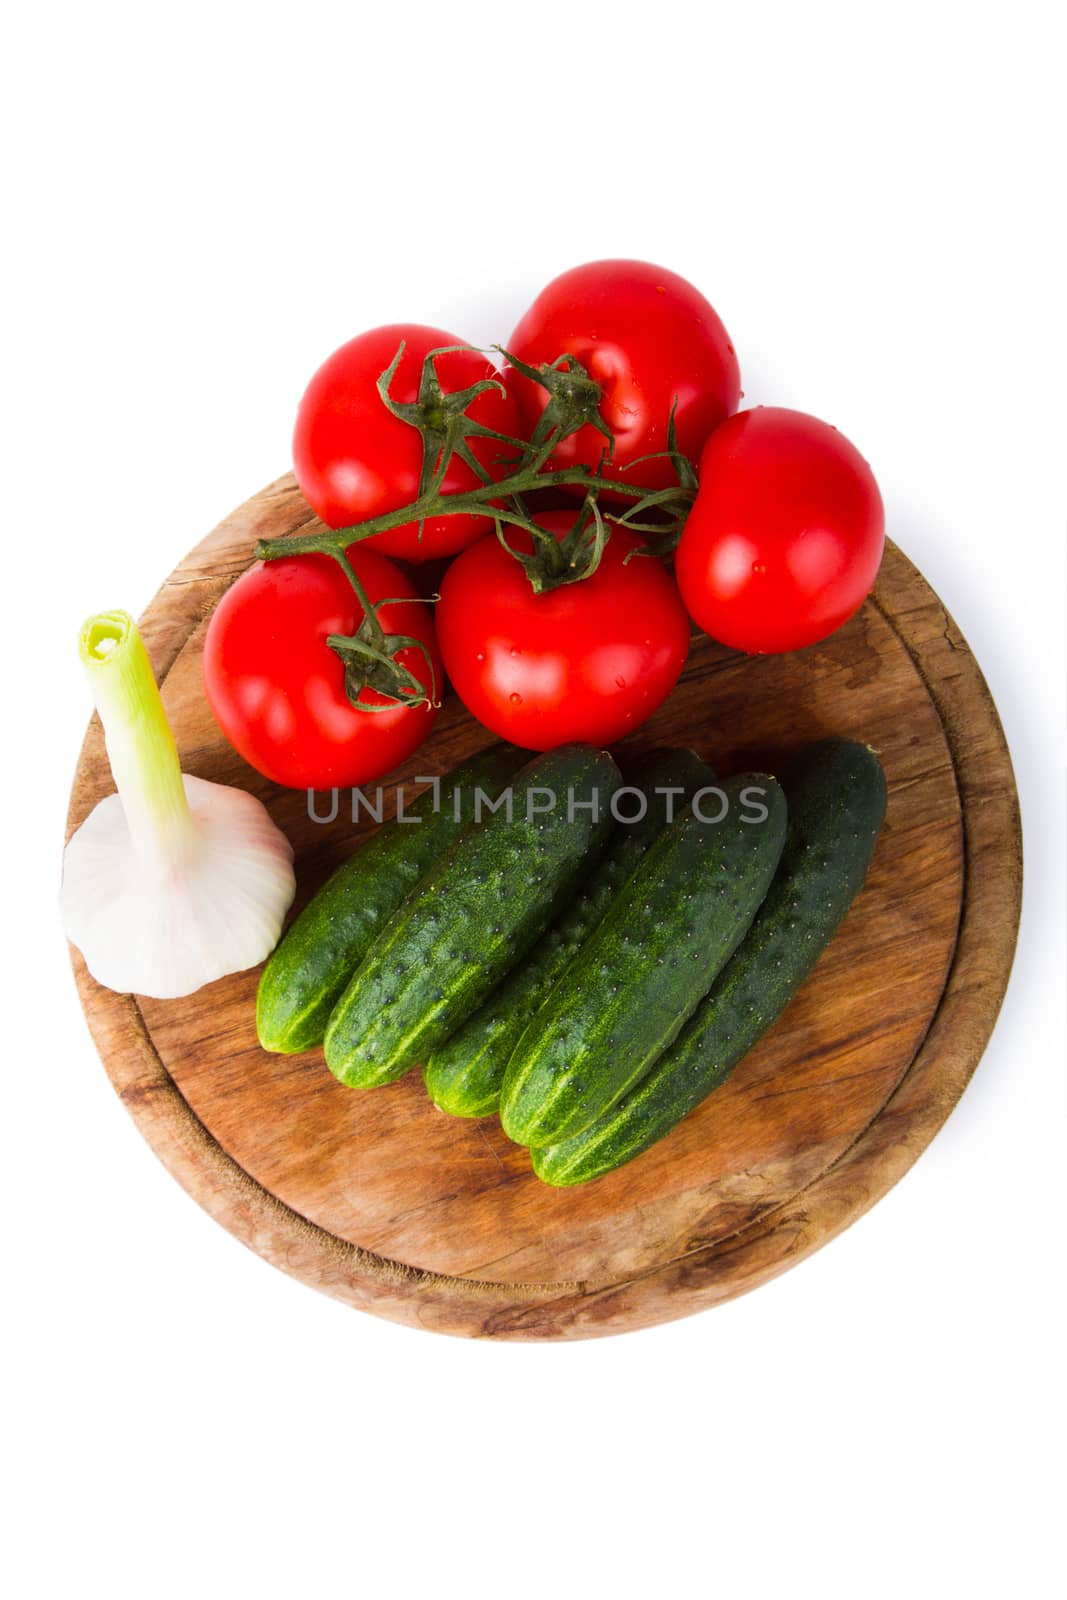 Fresh vegetables - Stock Image by grigorenko